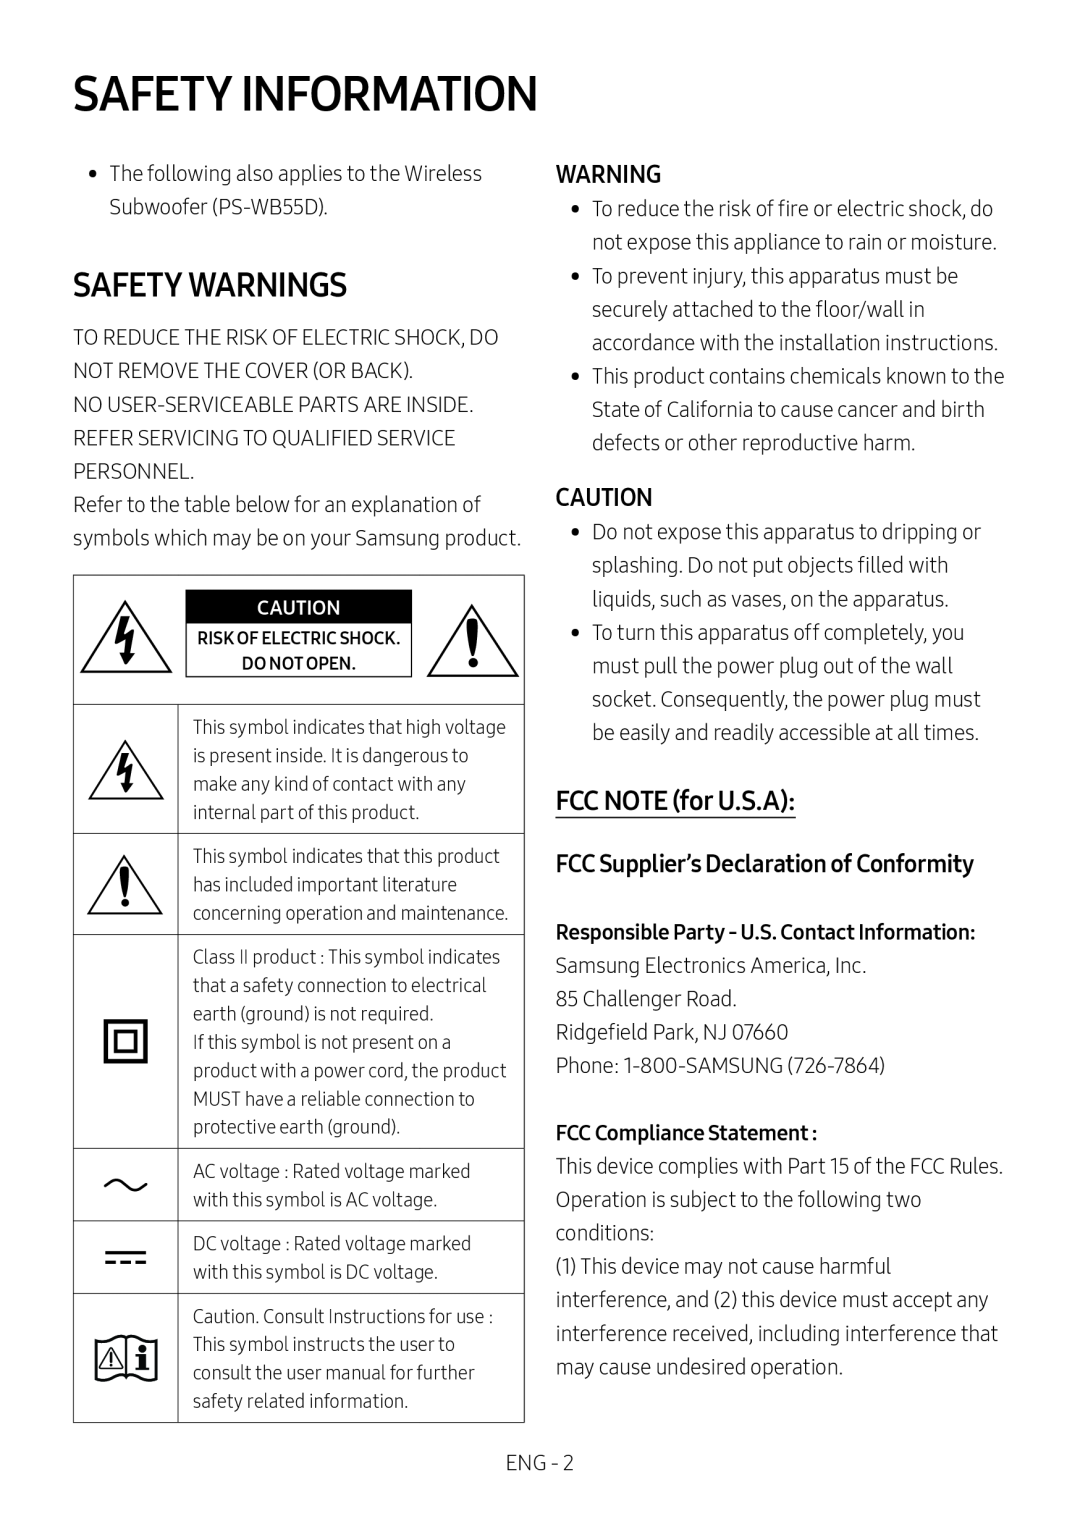 SAFETY WARNINGS Standard HW-B53M